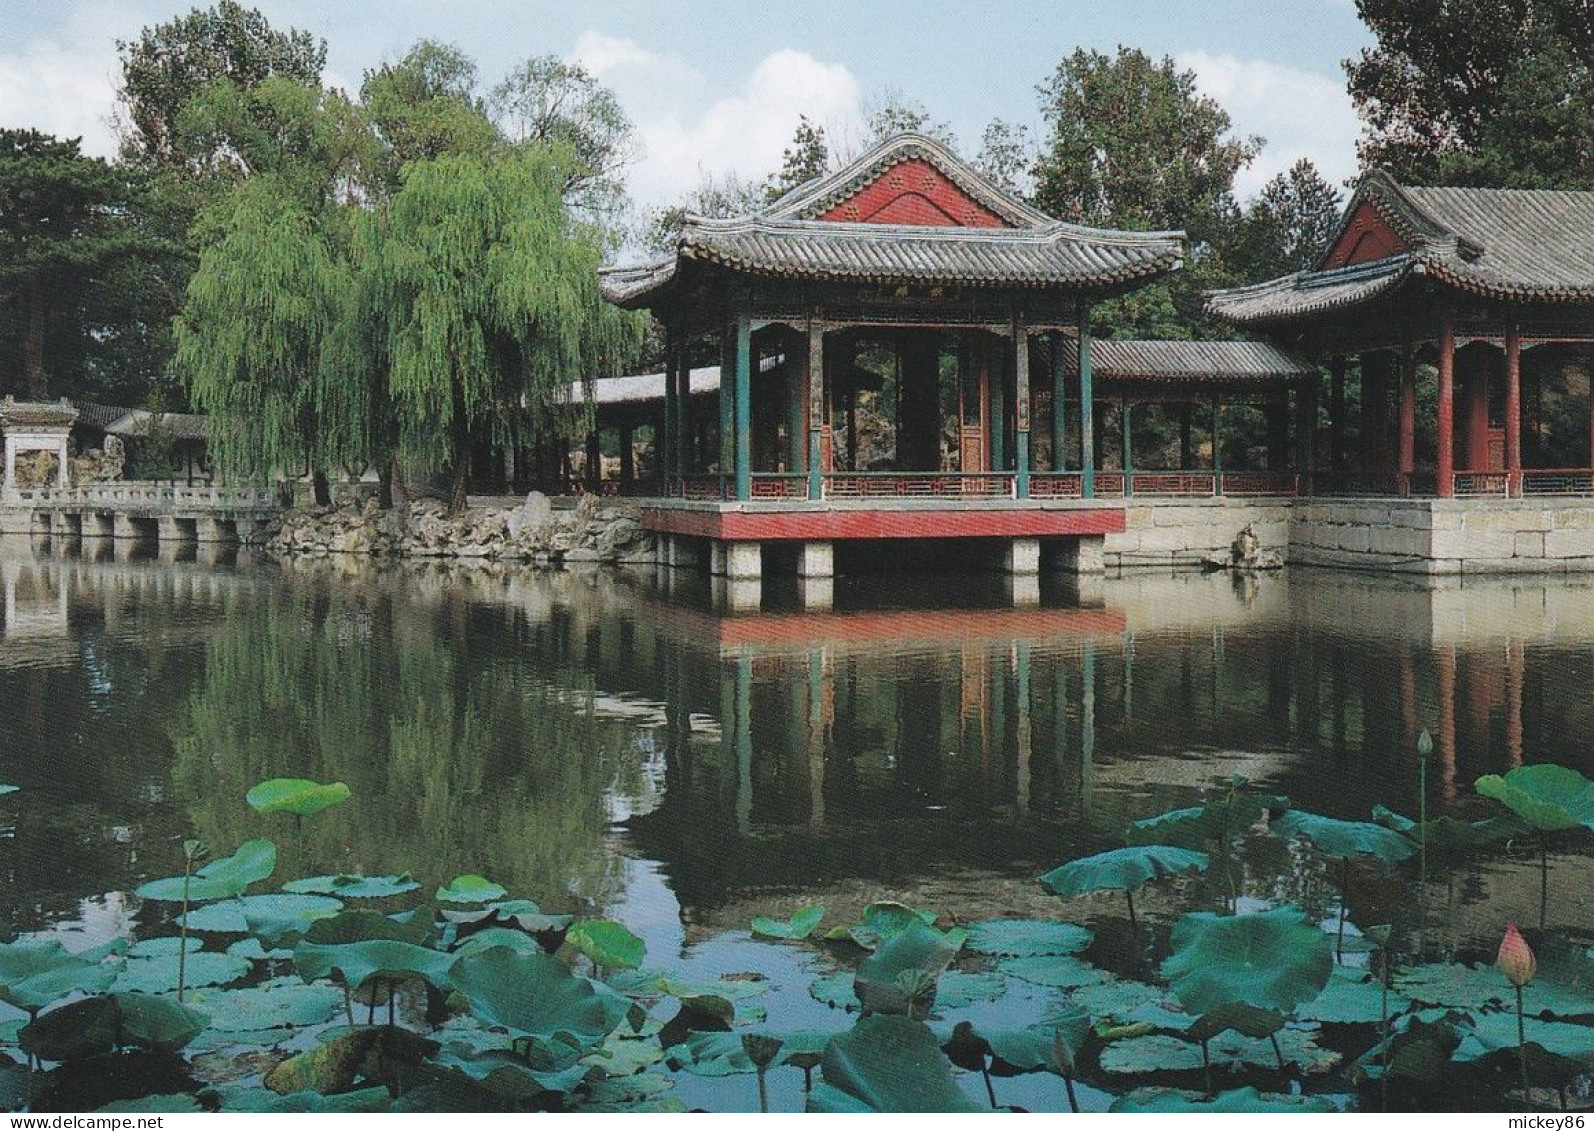 Chine--PEKIN -- Yi He Yuan --The Summer Palace ---Lot de 10 cartes postales dans l'emballage d'origine --